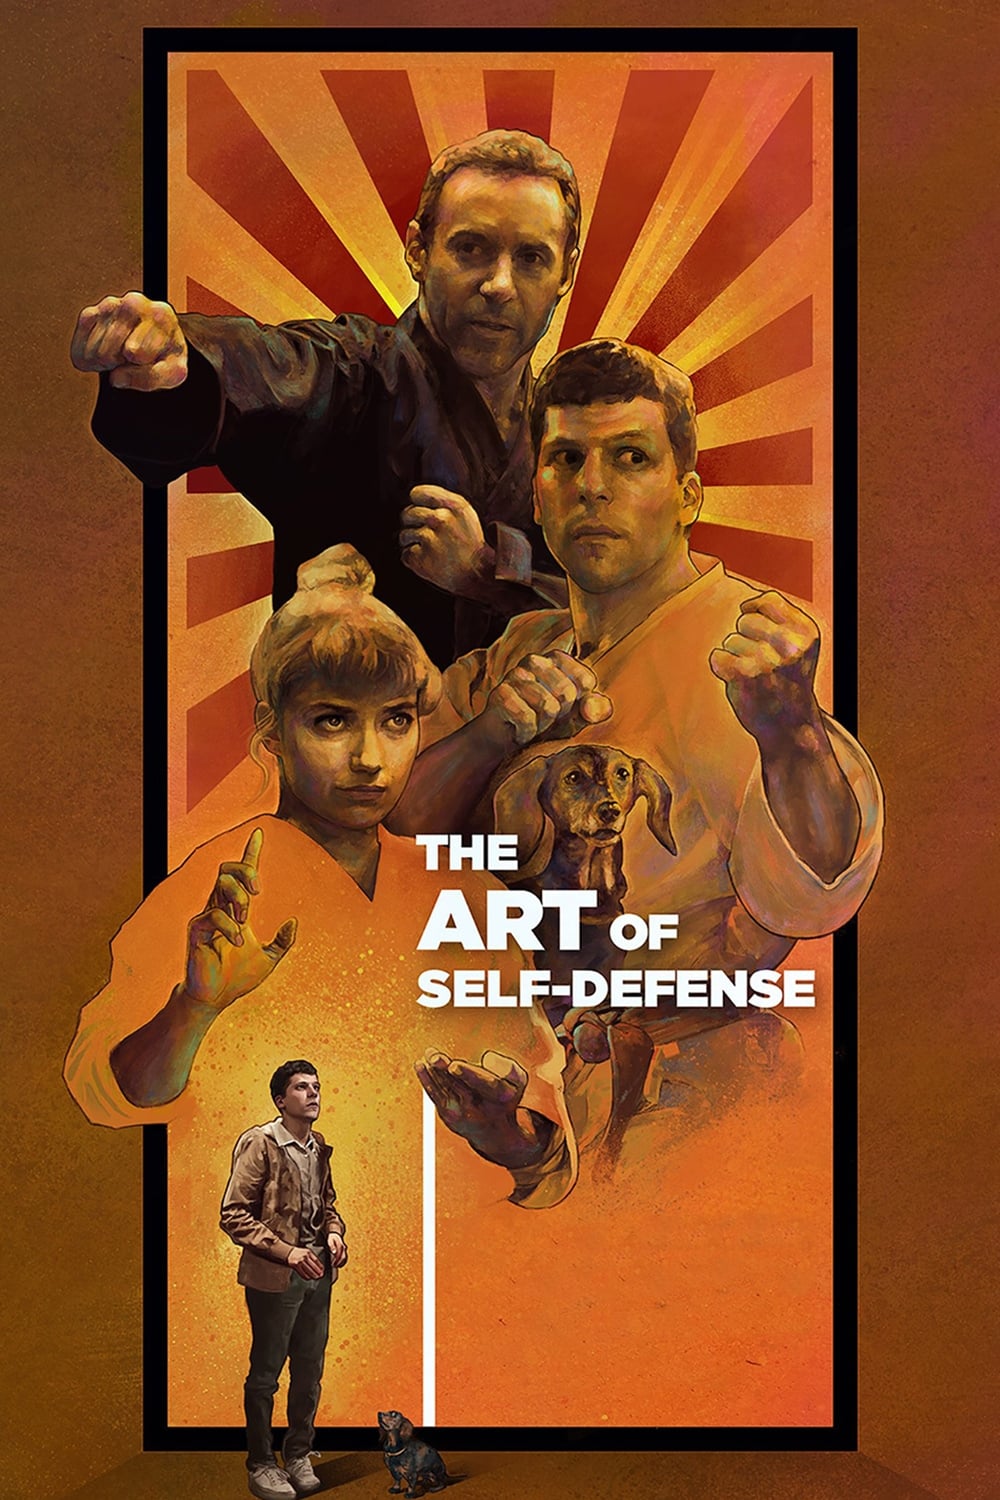 The Art of Self-Defense poster